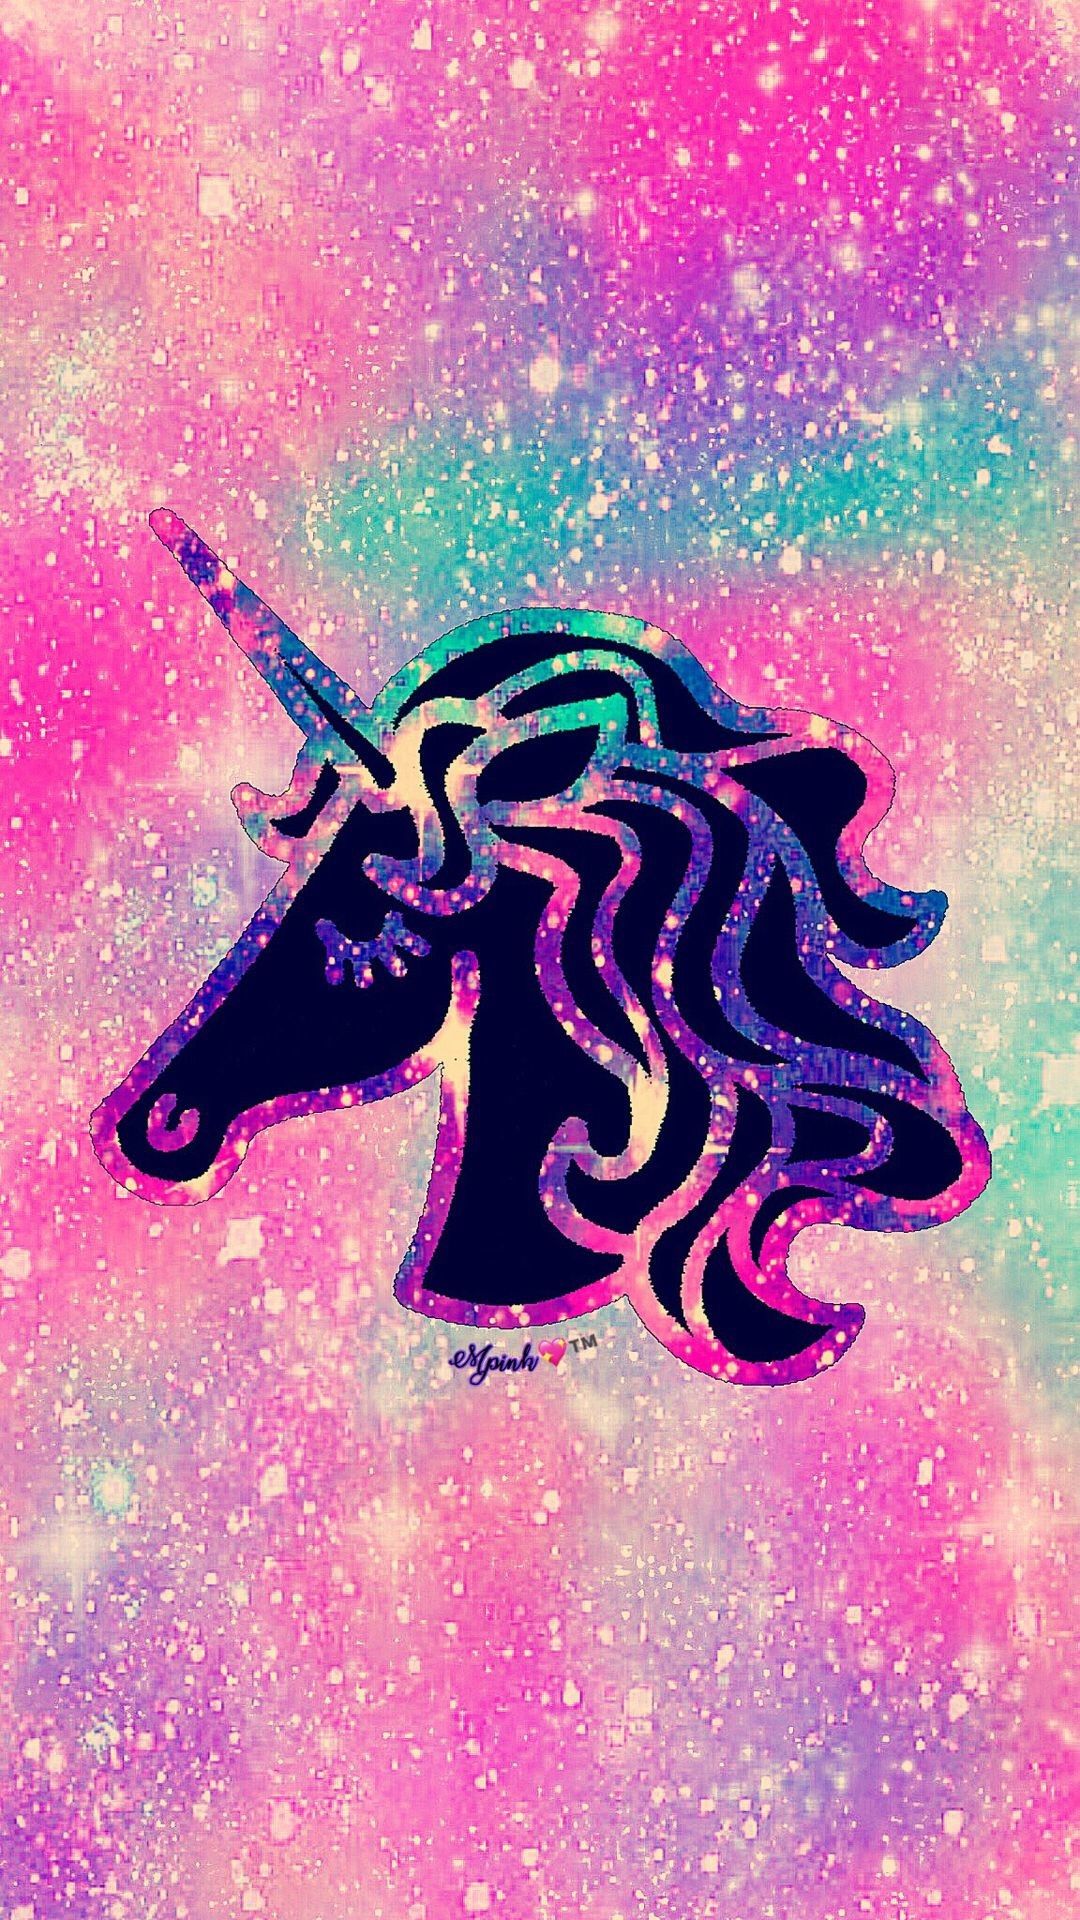 Pastel Unicorn Wallpaper